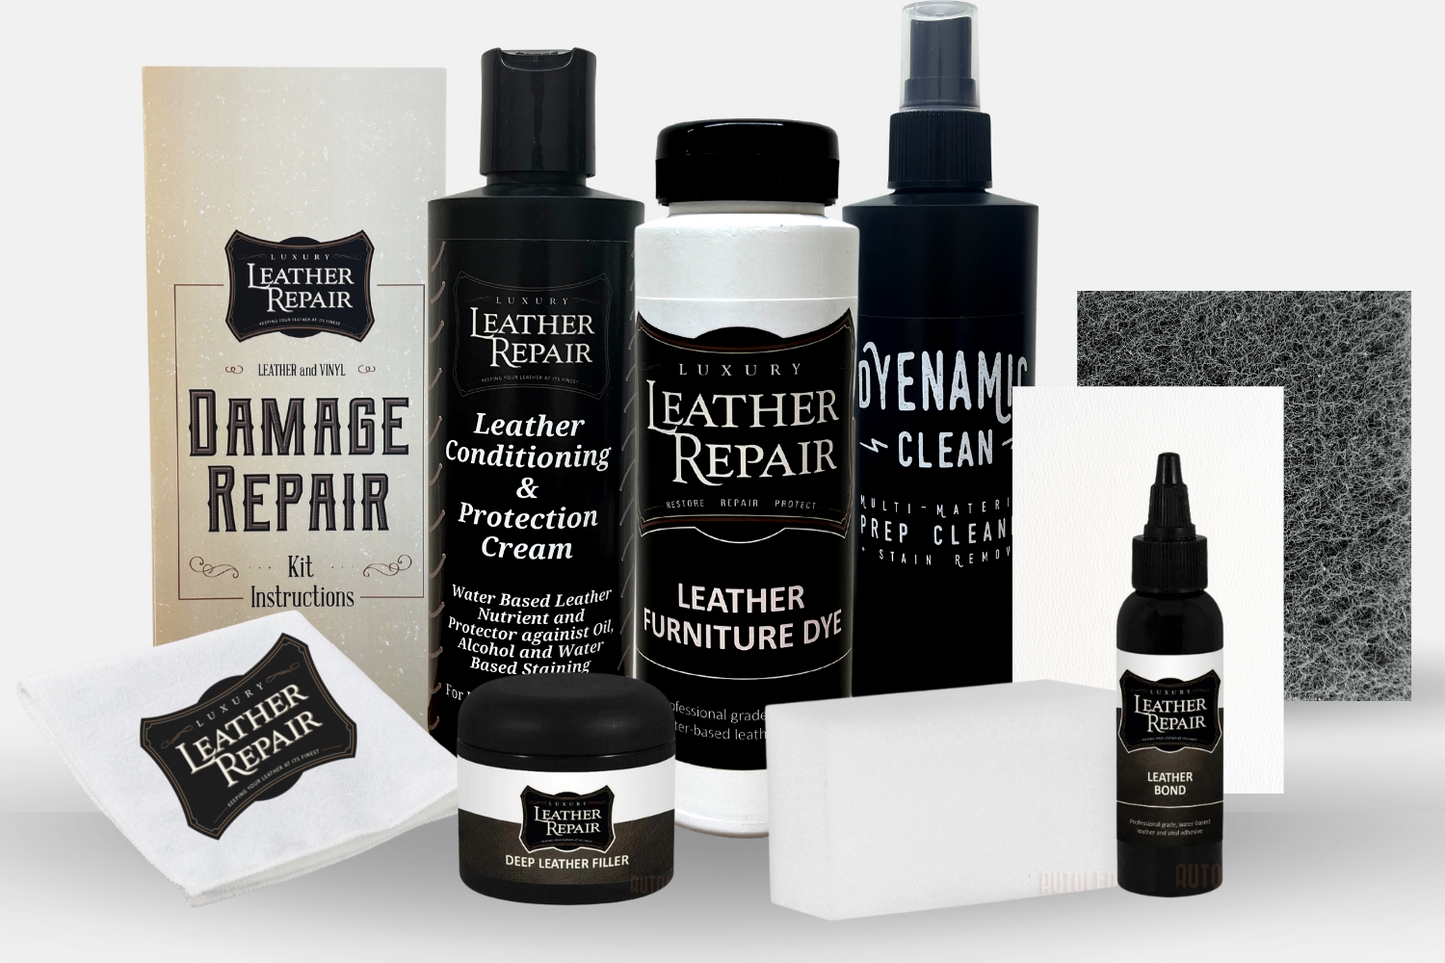 High Quality Pvc Glue Vinyl Leather Repair Kit - Buy High Quality Pvc Glue  Vinyl Leather Repair Kit Product on